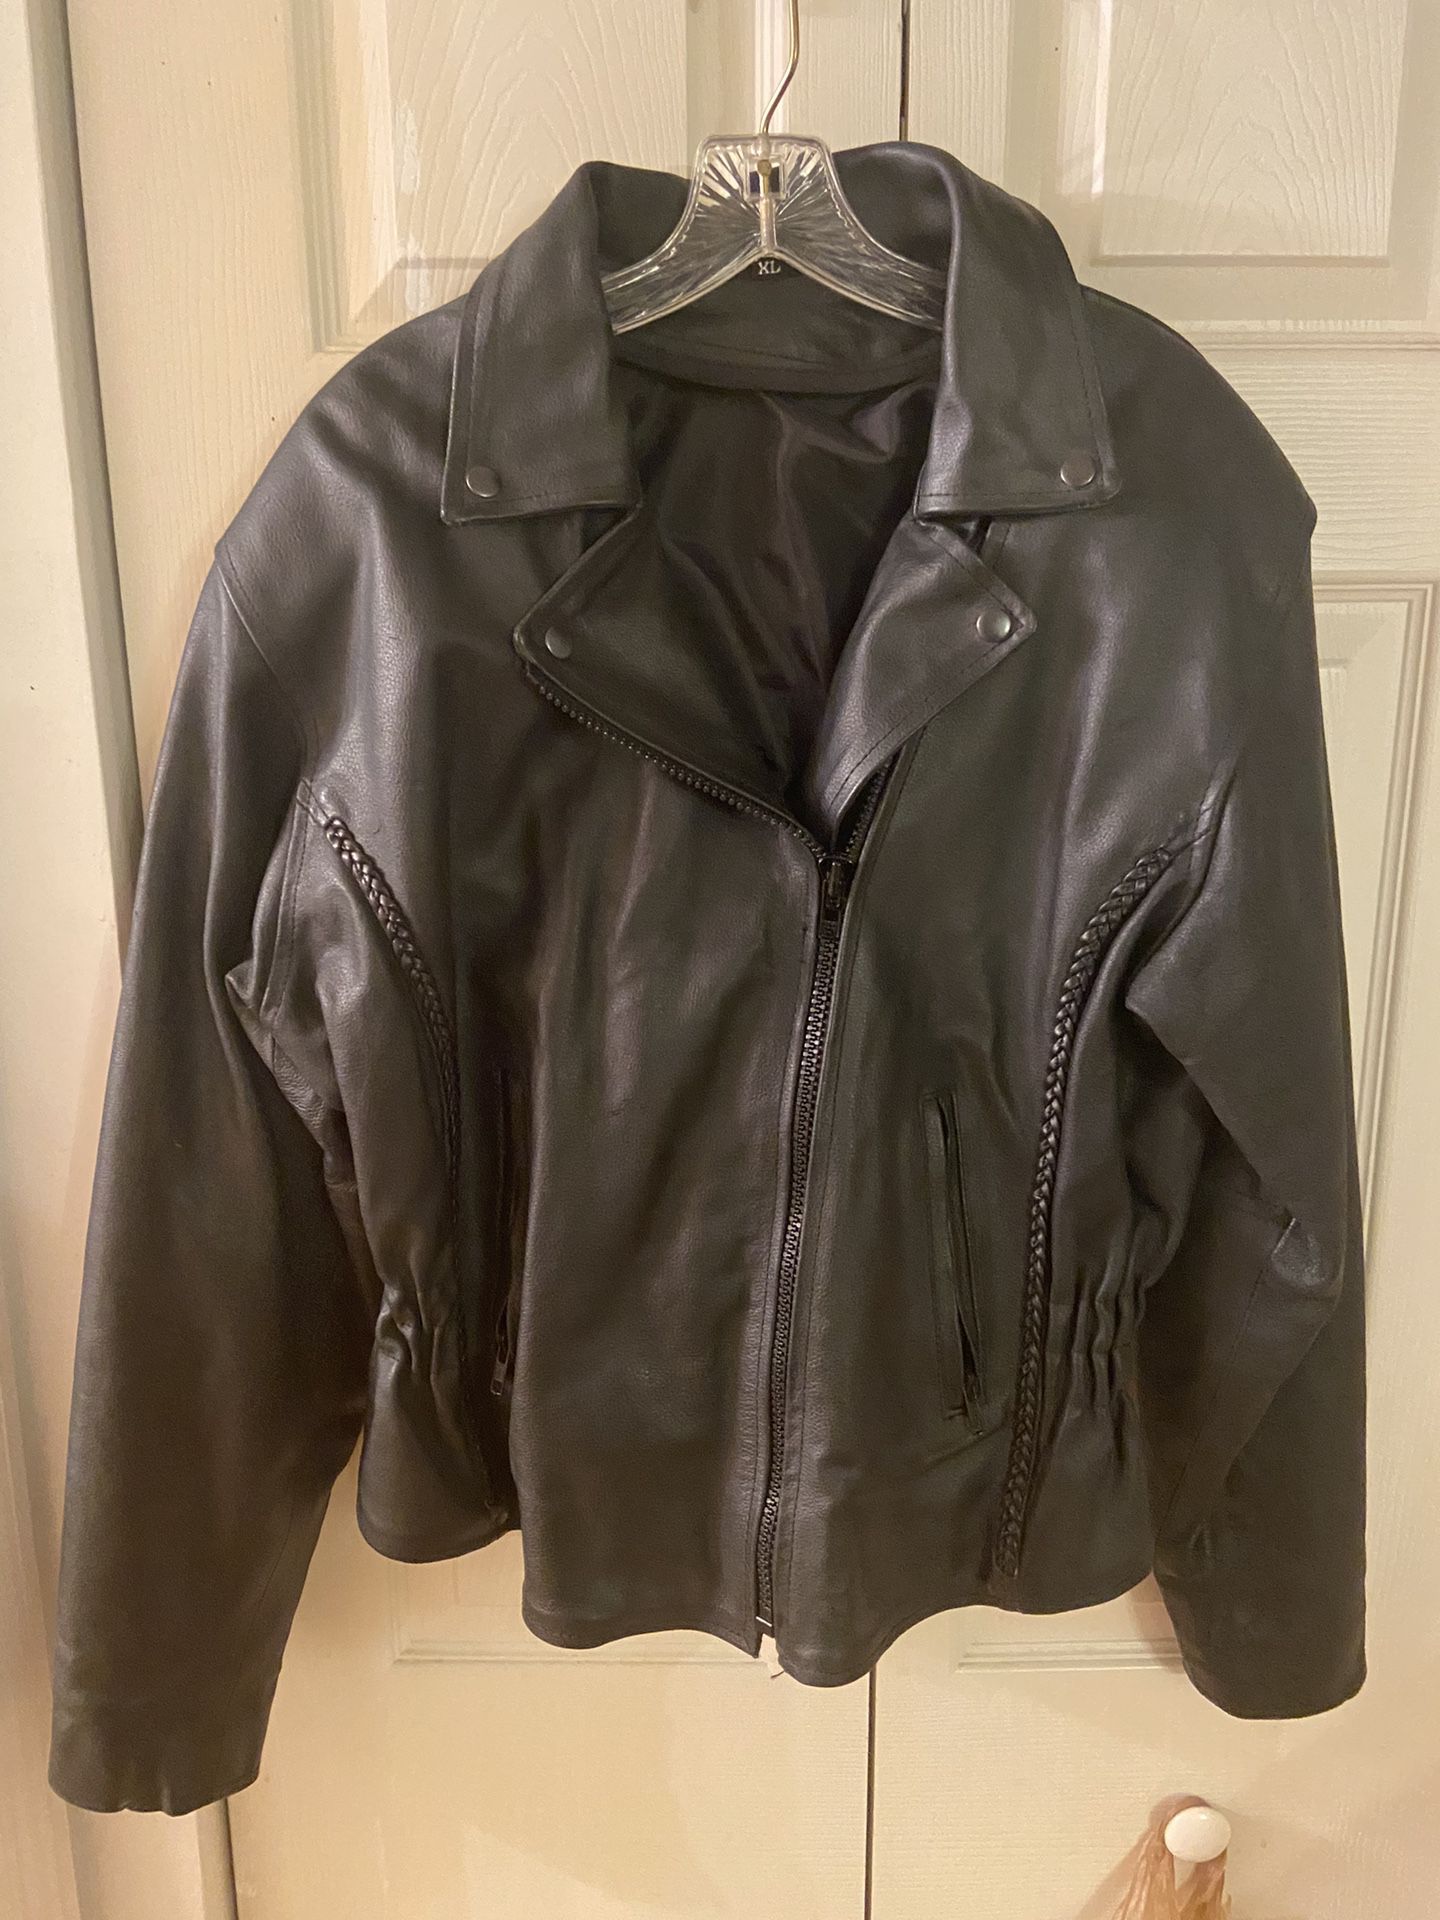 Lady Biker Leather Jacket - XL New